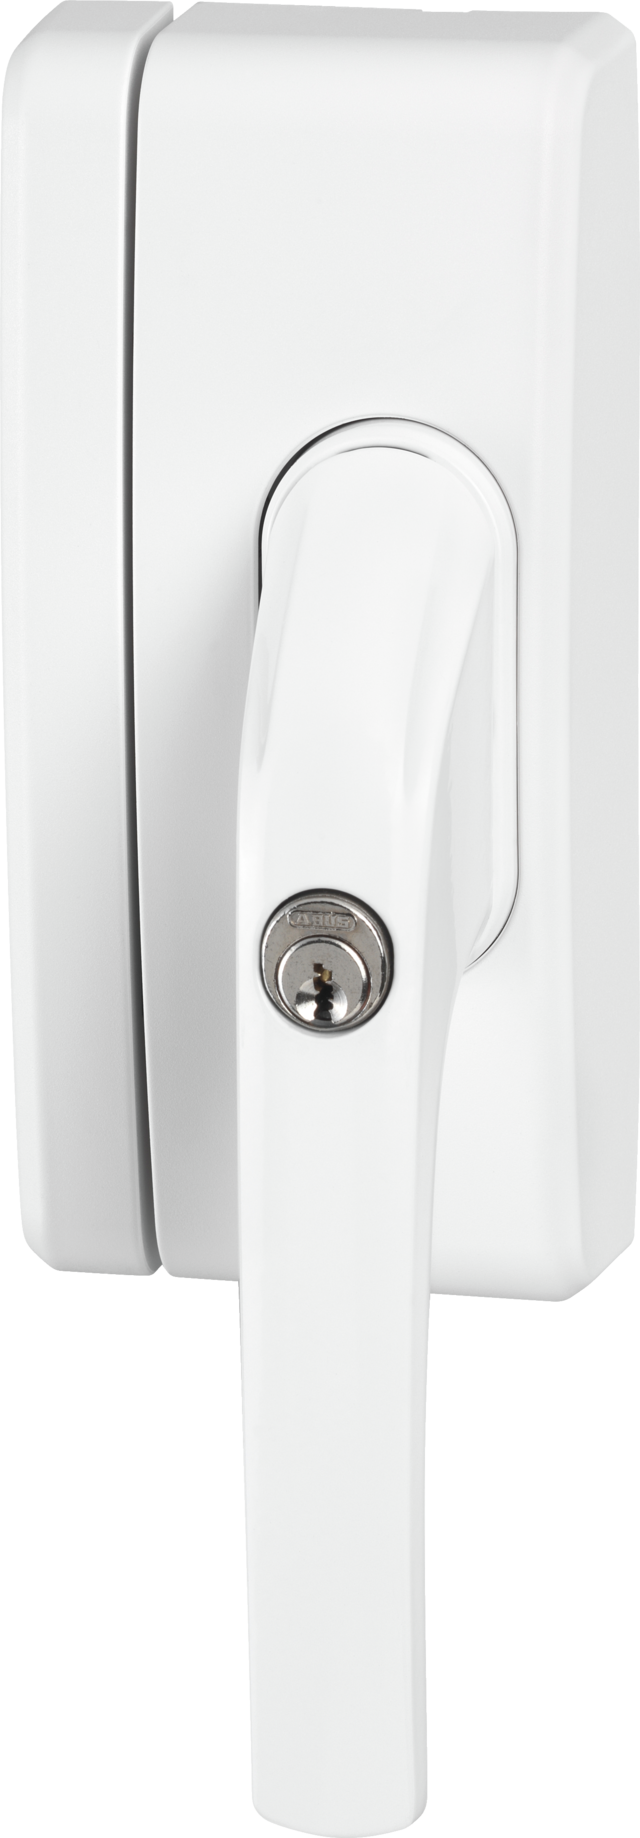 Secvest wireless window handle lock FO 400 E - AL0125 (white) front view left